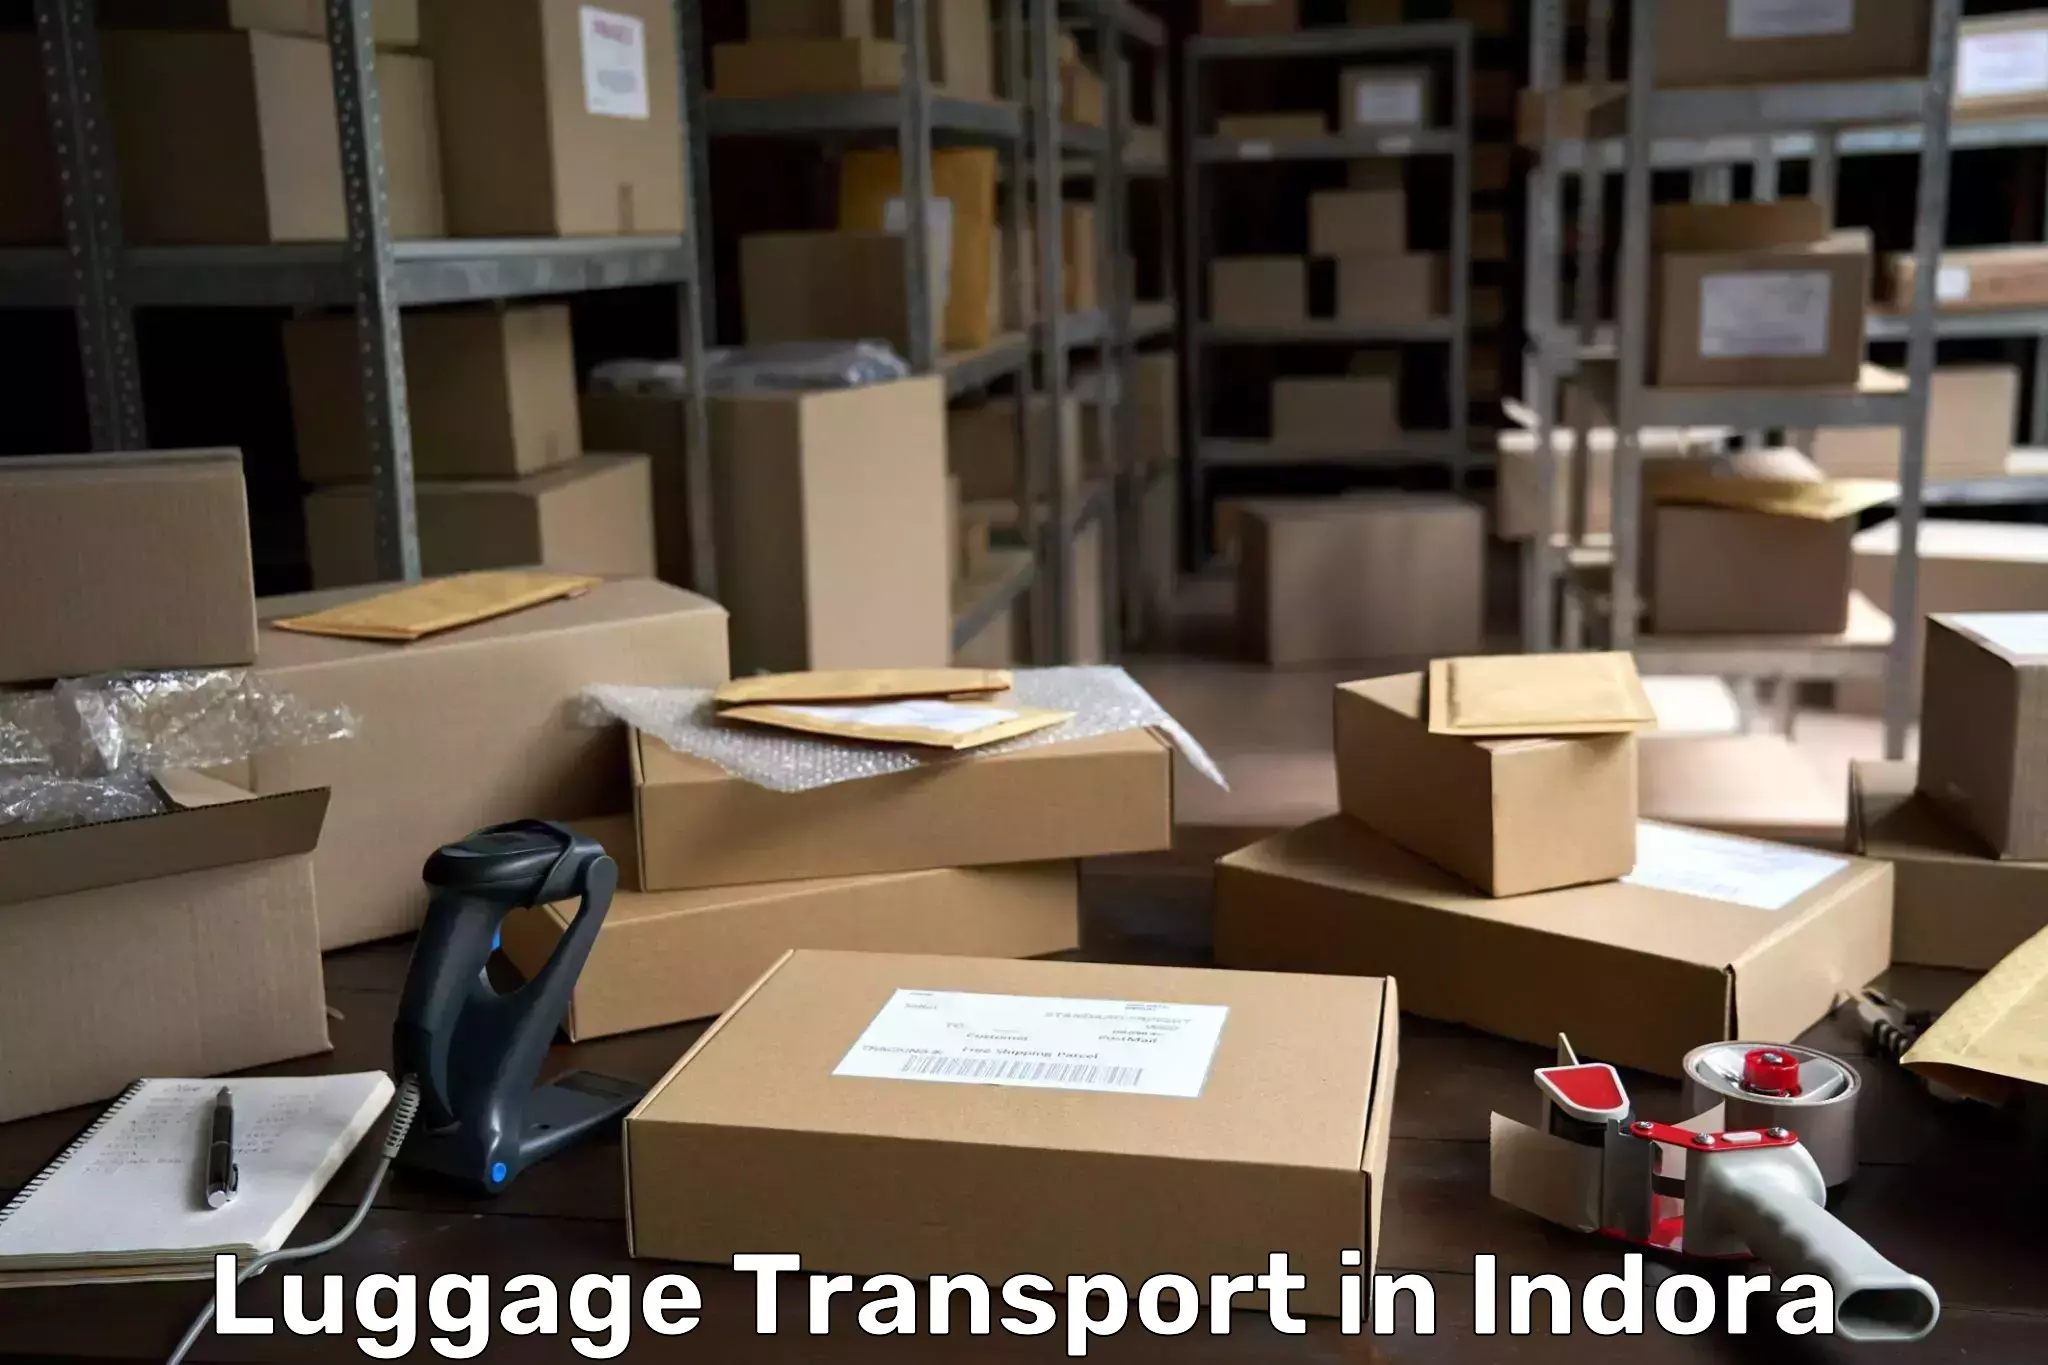 Luggage transit service in Indora